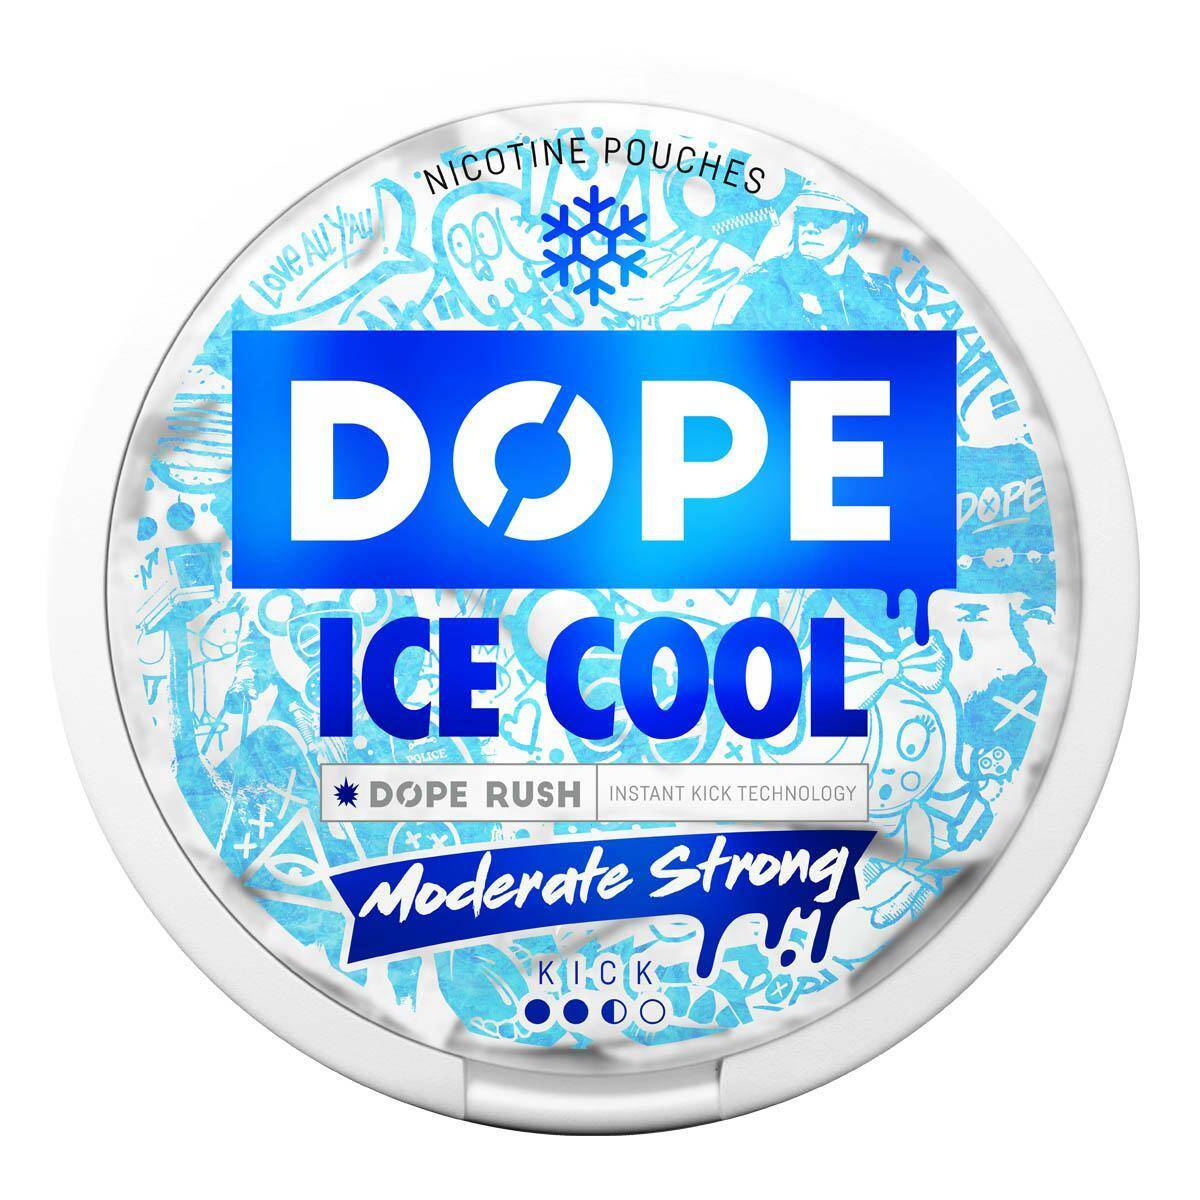 SNUS - Saszetki nikotynowe DOPE - Ice Cool 16mg/g